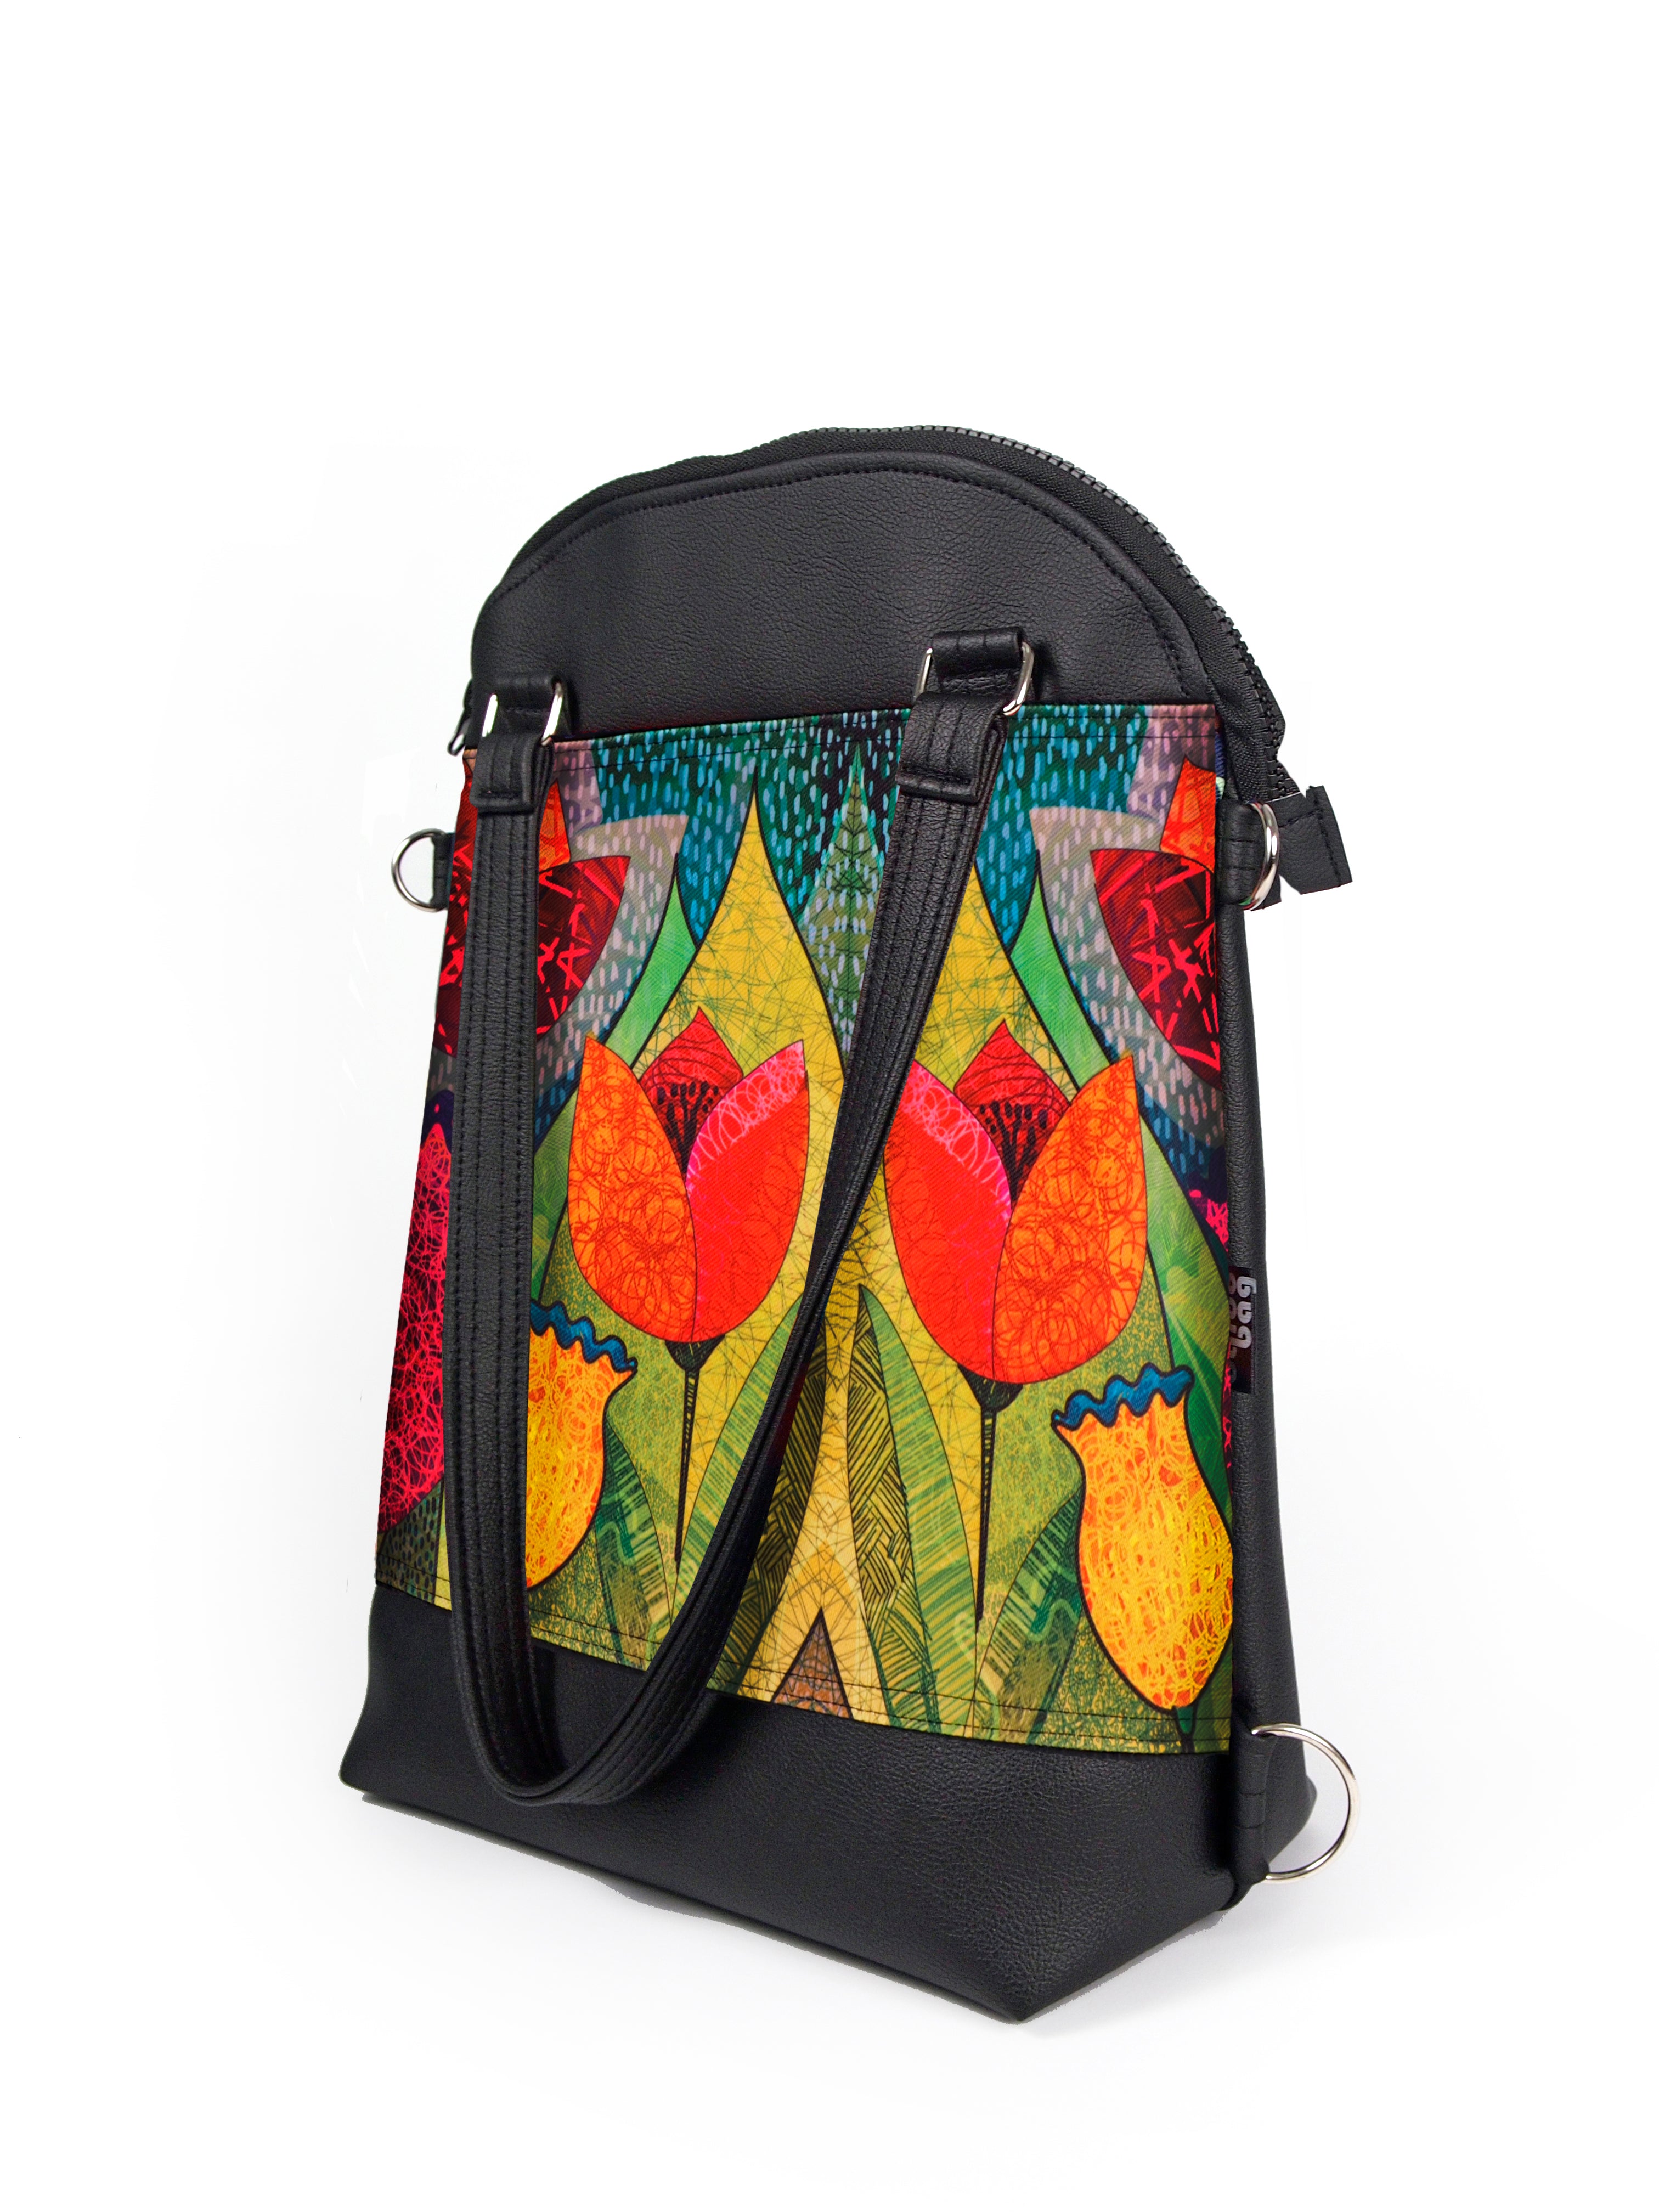 Bardo classic bag&backpack - Fairy garden - Premium  from BARDO ART WORKS - Just lv89.00! Shop now at BARDO ART WORKS